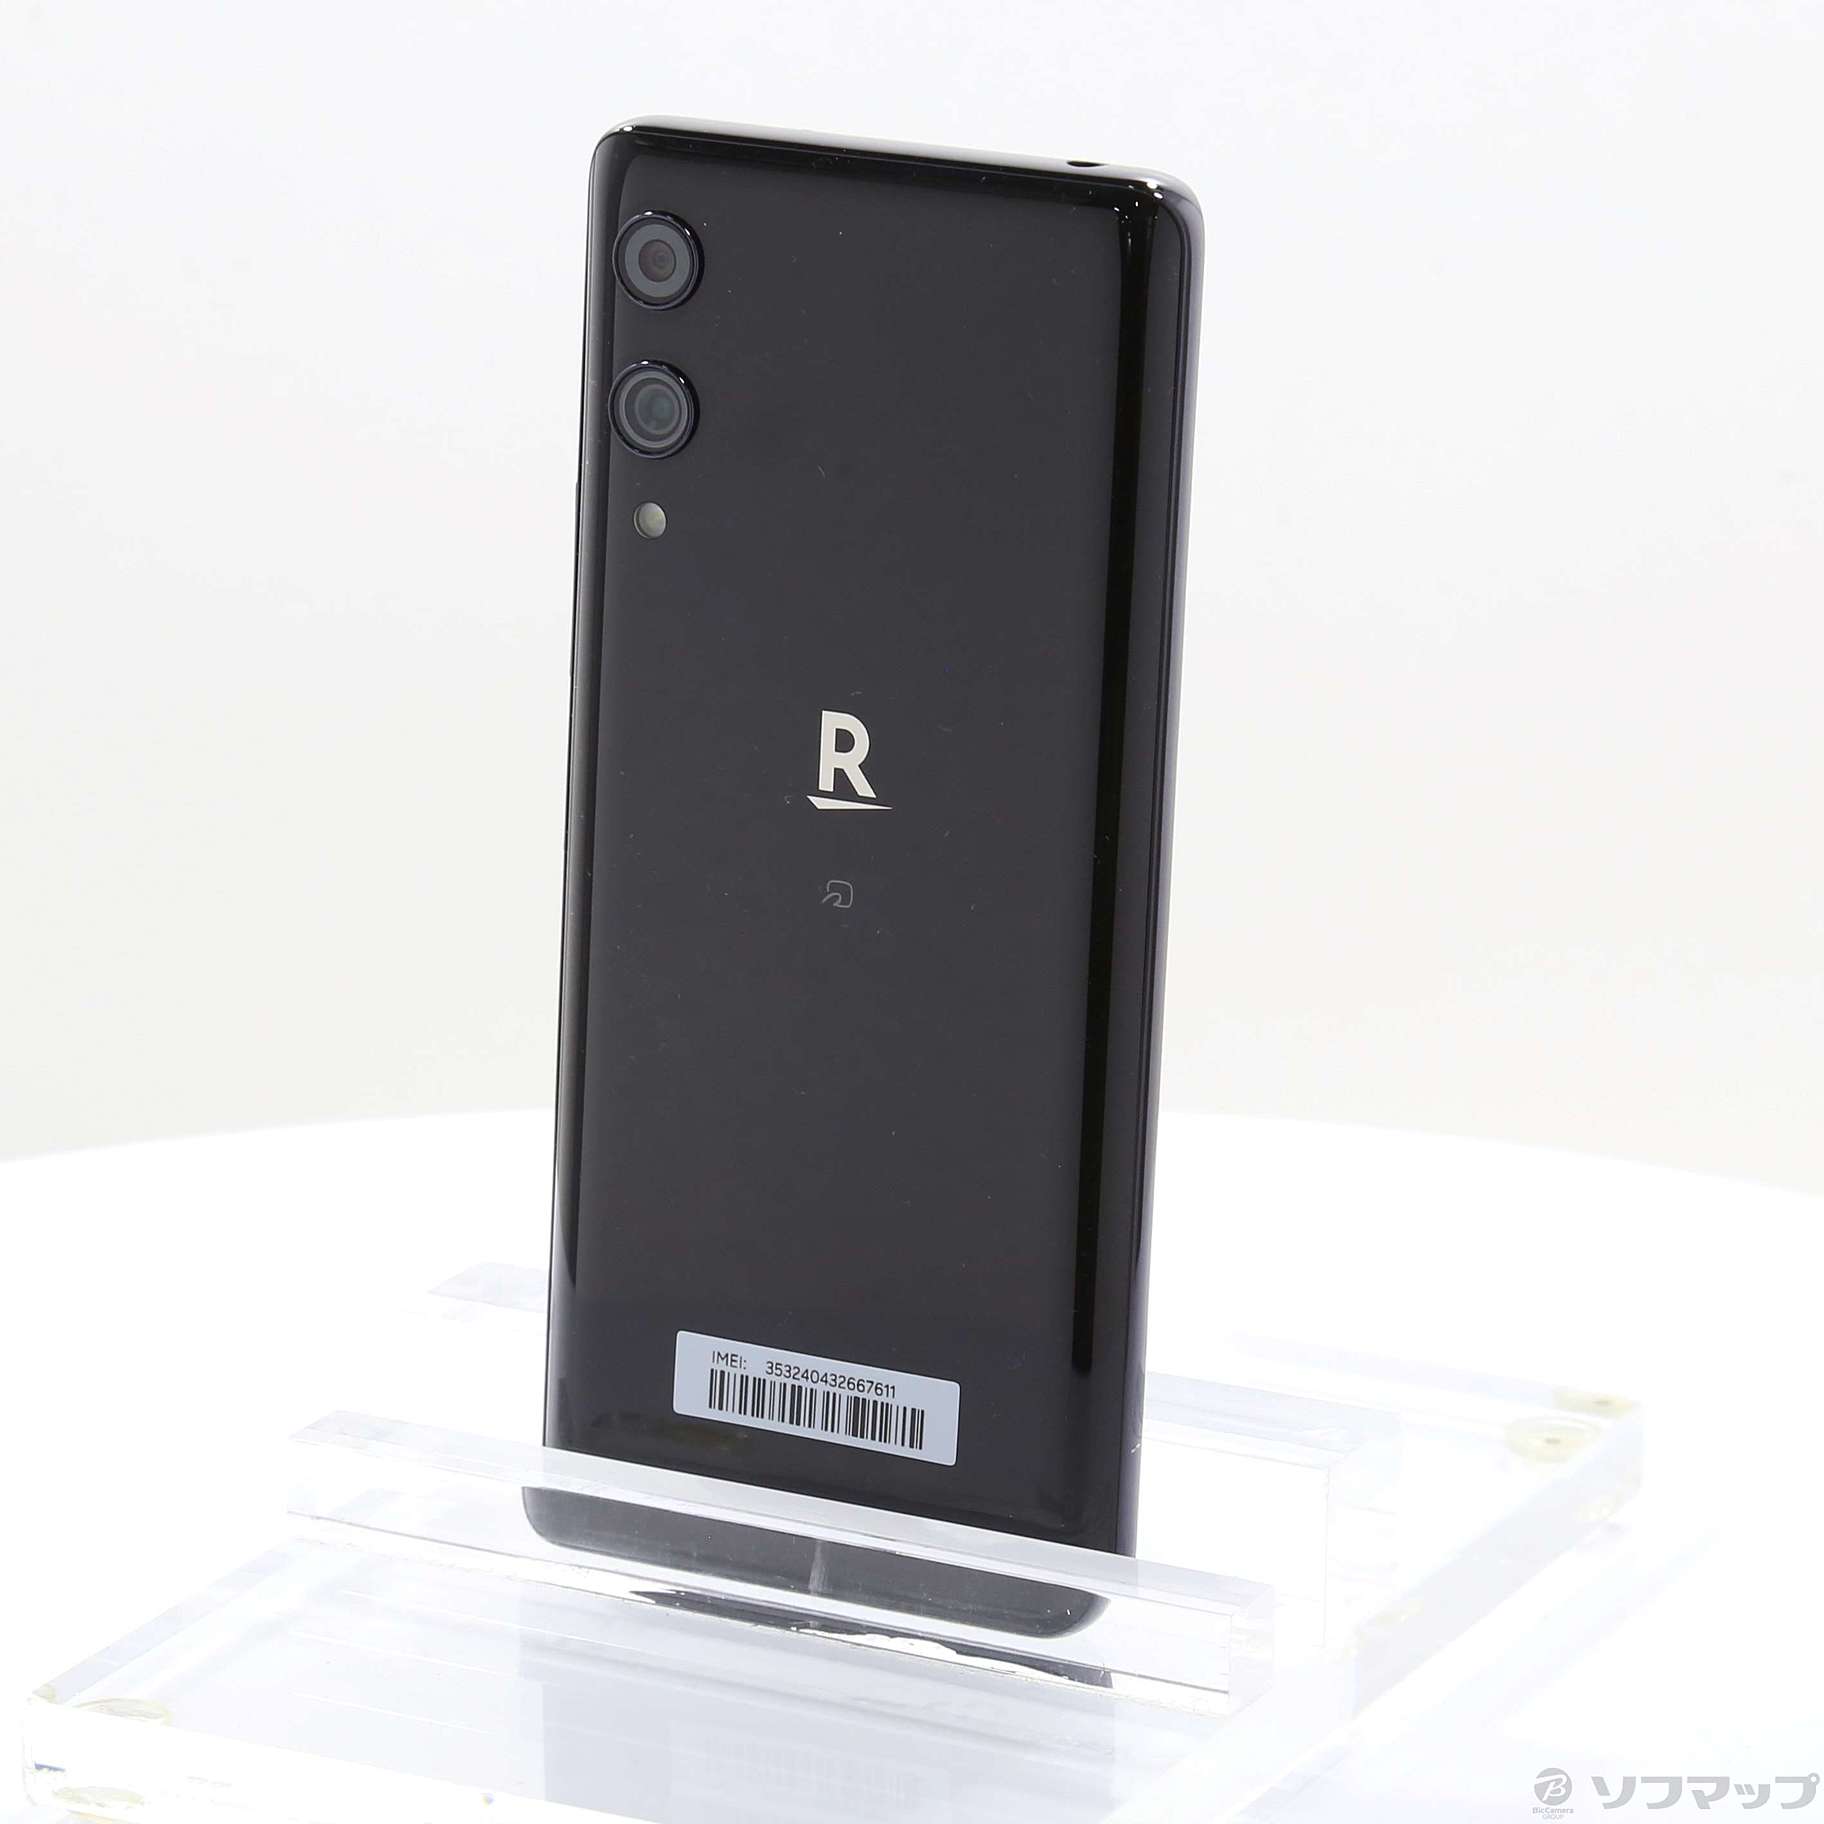 Rakuten Hand 64GB ブラック P710 SIMフリー